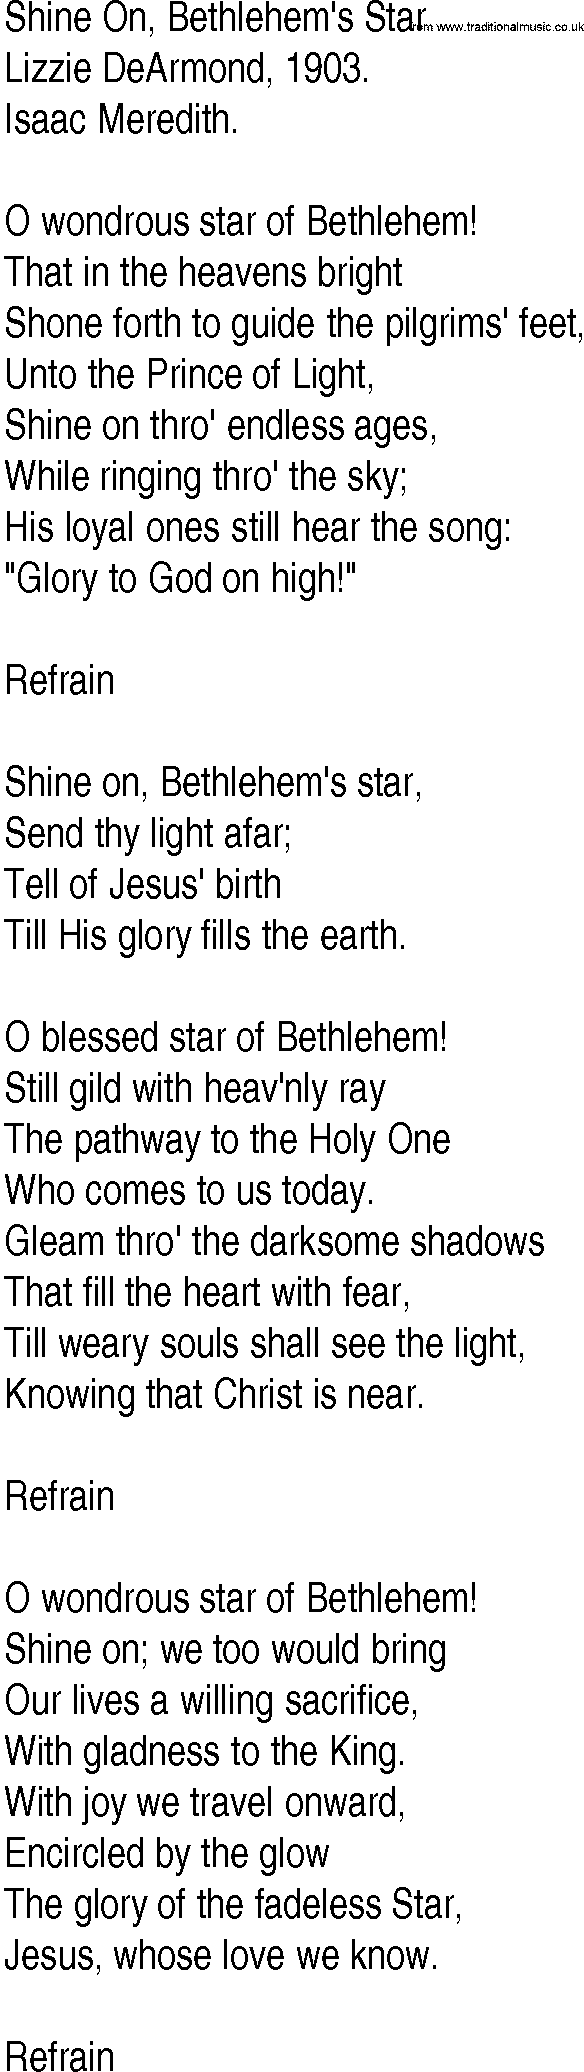 Hymn and Gospel Song: Shine On, Bethlehem's Star by Lizzie DeArmond lyrics